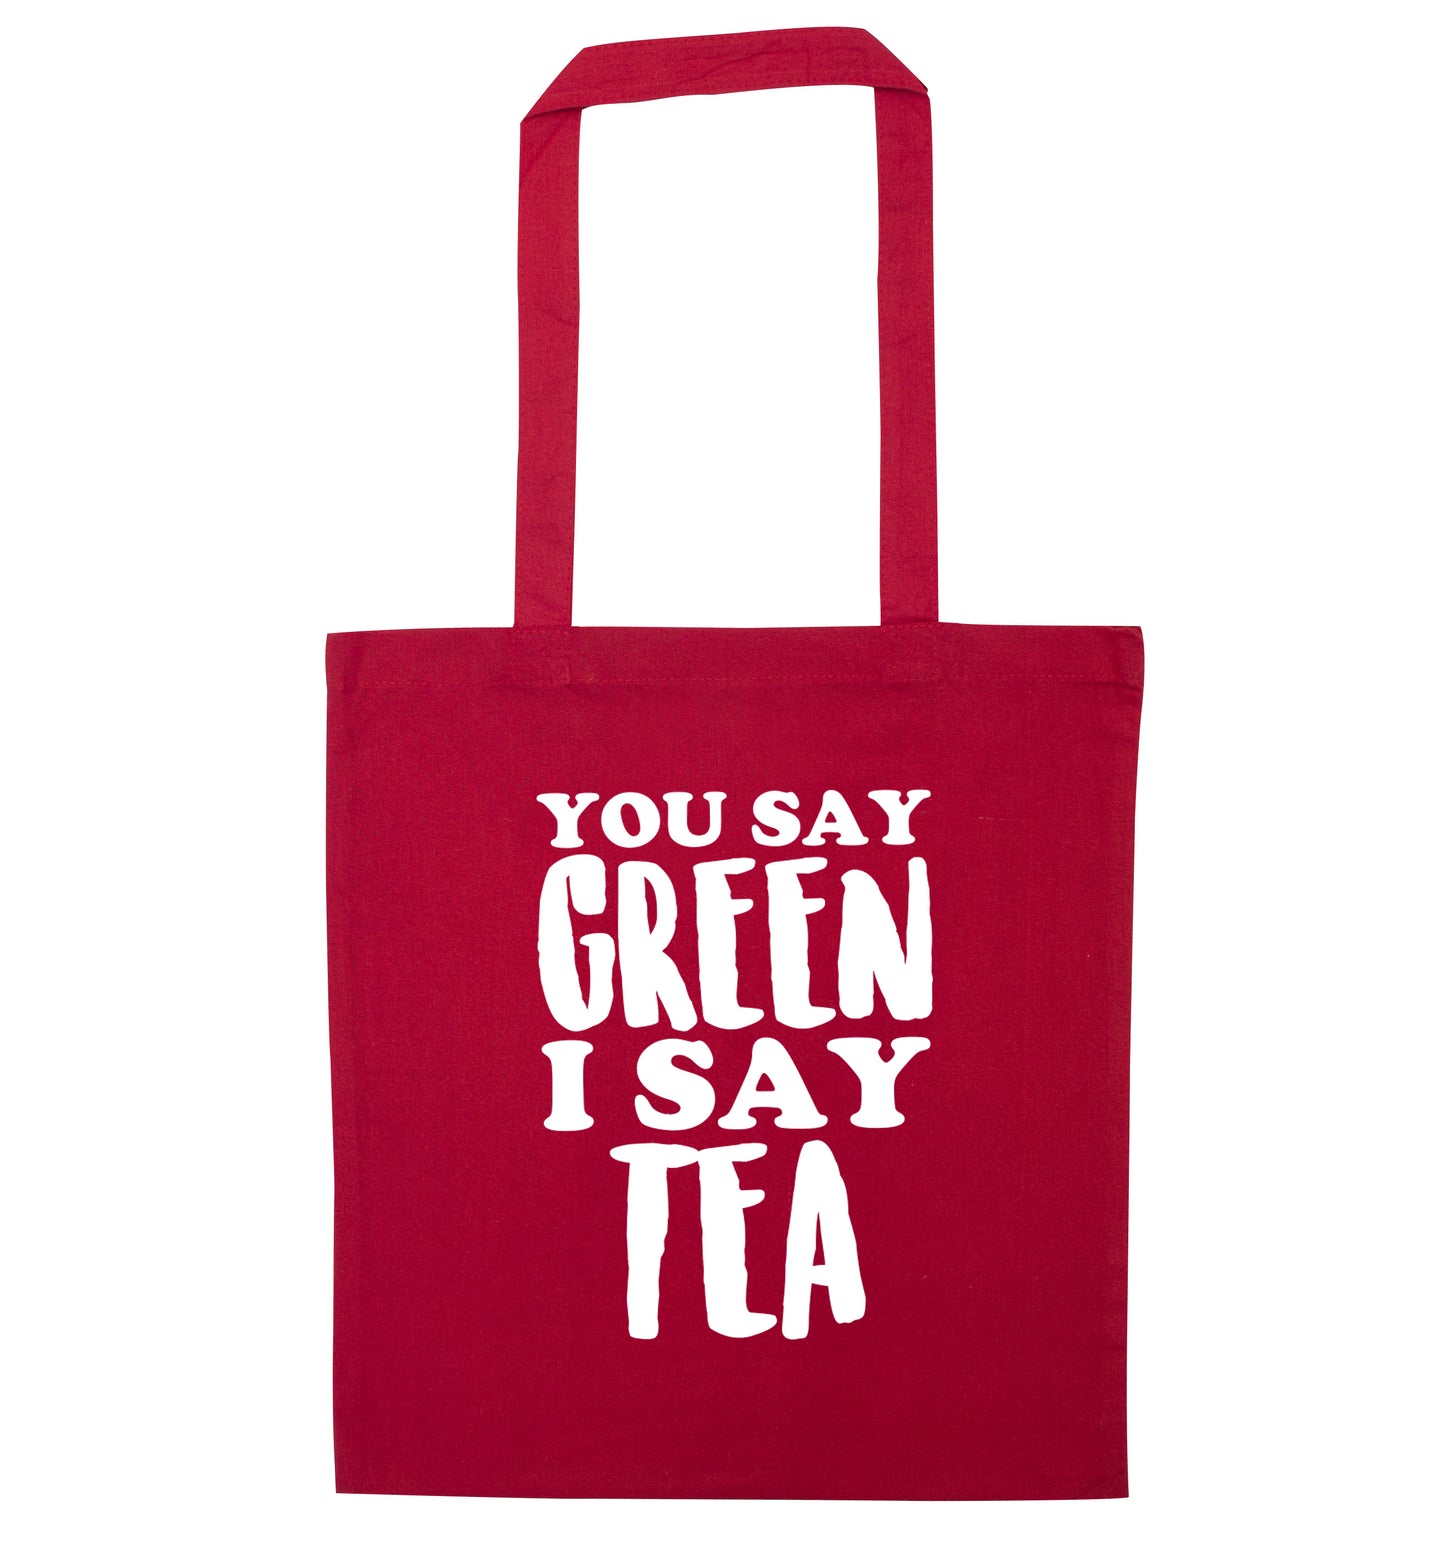 You say green I say tea! red tote bag